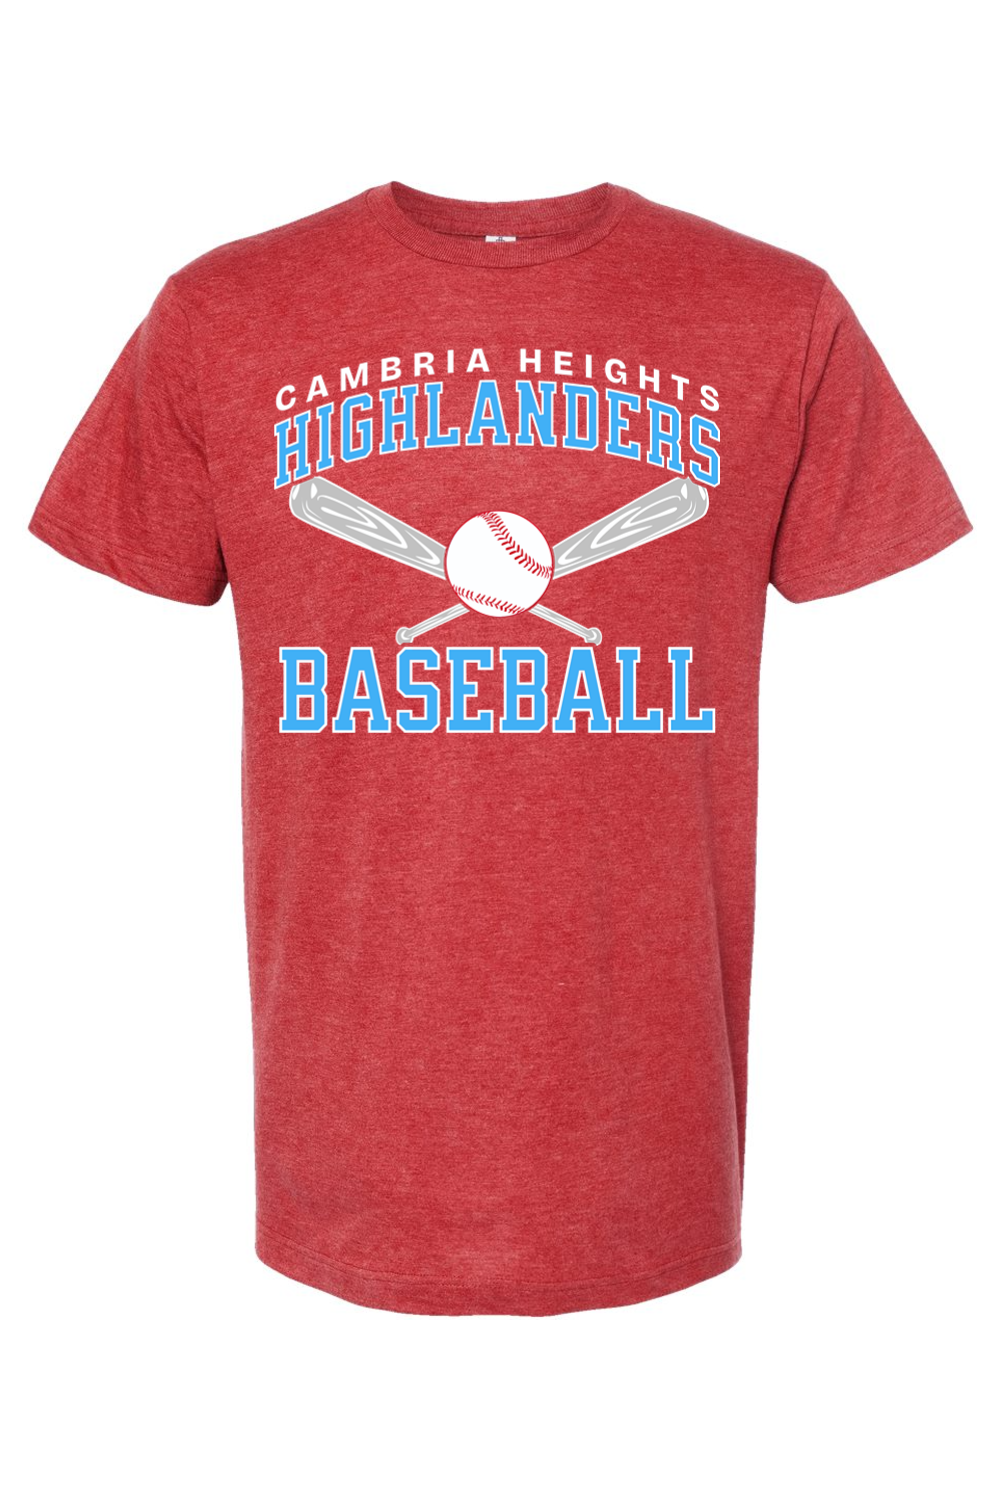 Cambria Heights Highlanders Baseball - Retro - T-Shirt - Yinzylvania